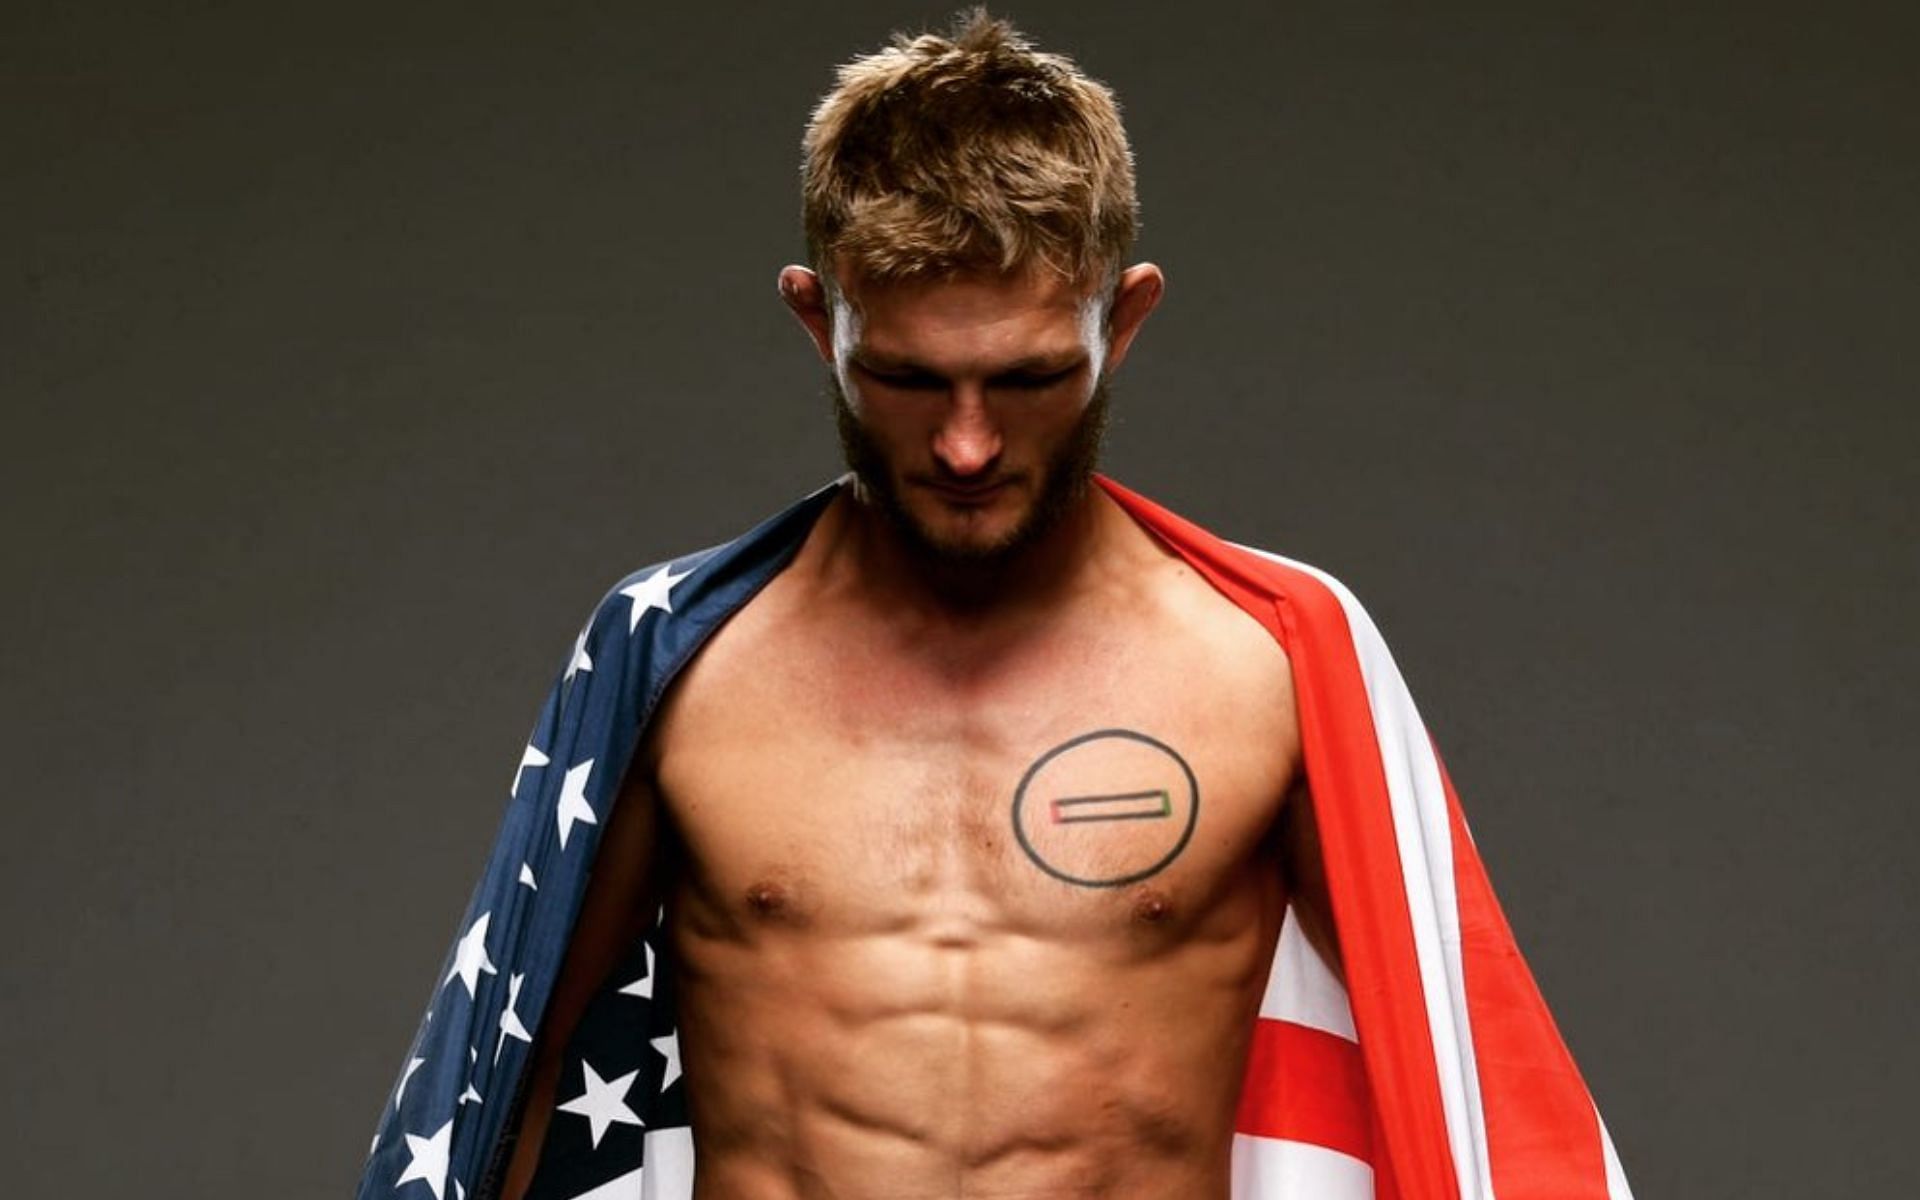 UFC fighter Jonathan Pearce [Image credits: @jspmma on Instagram]